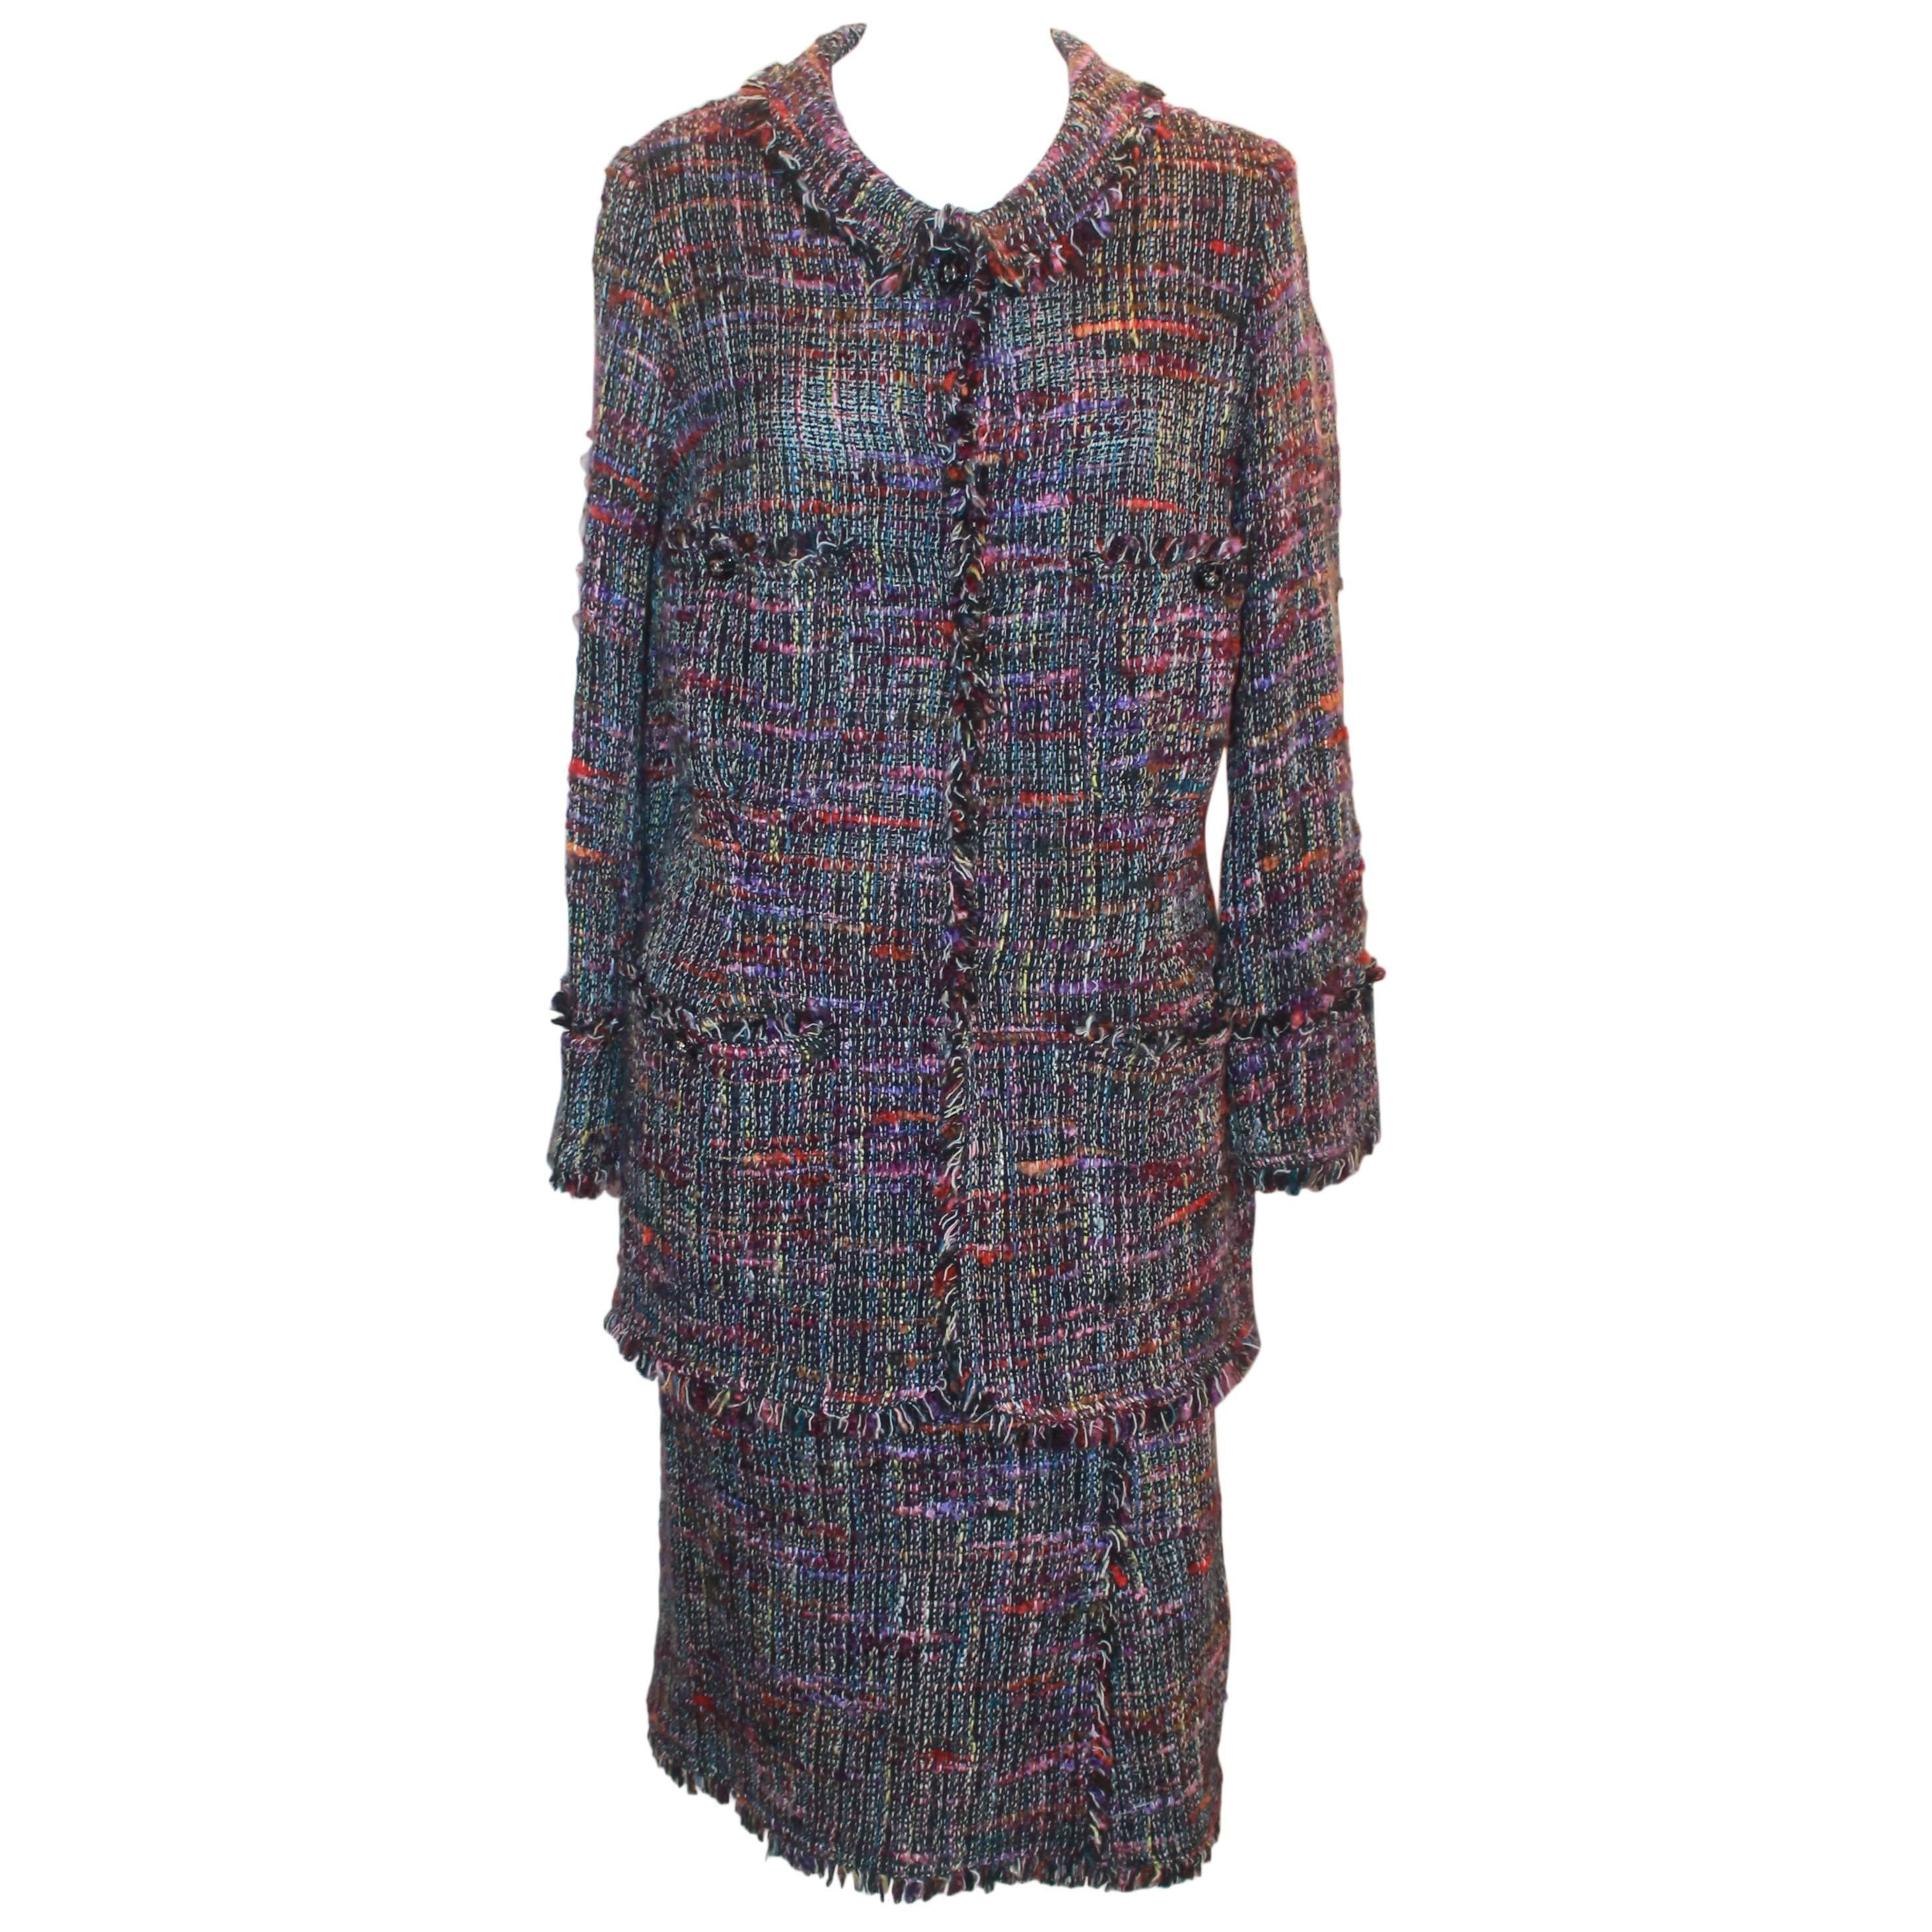 Chanel 1980's Vintage Multi-color Tweed Skirt Suit - Size Medium